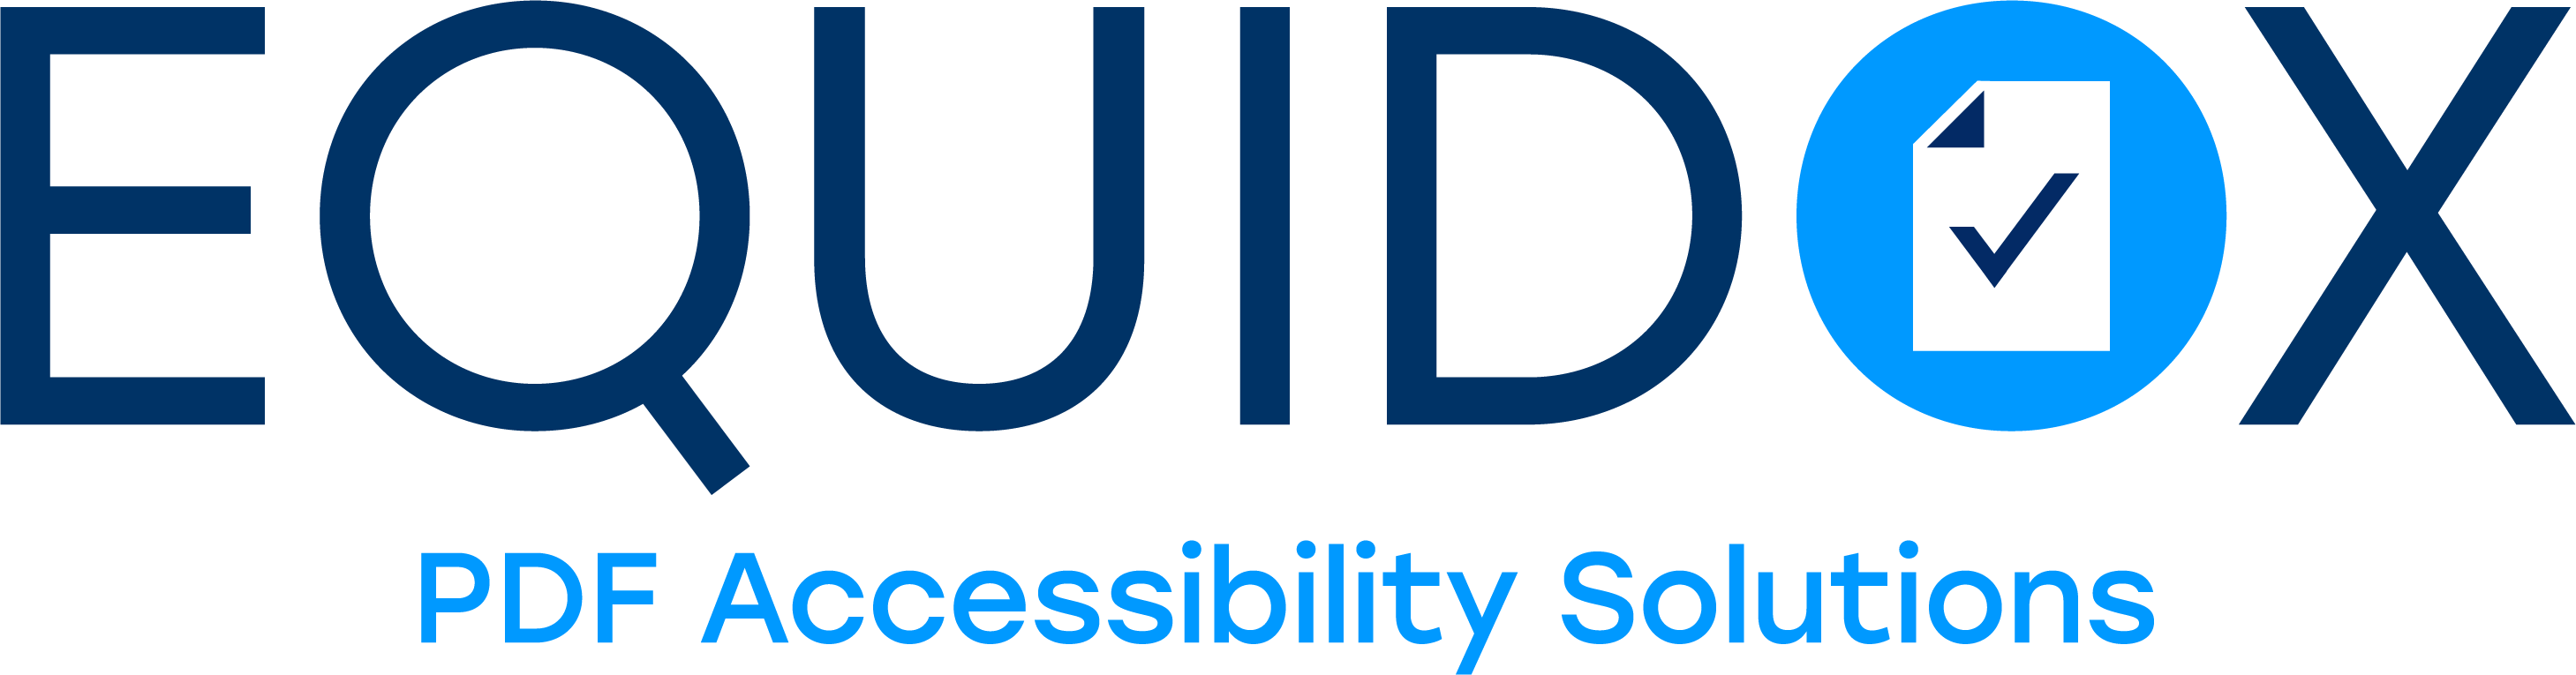 Equidox PDF Accessibility Solutions logo